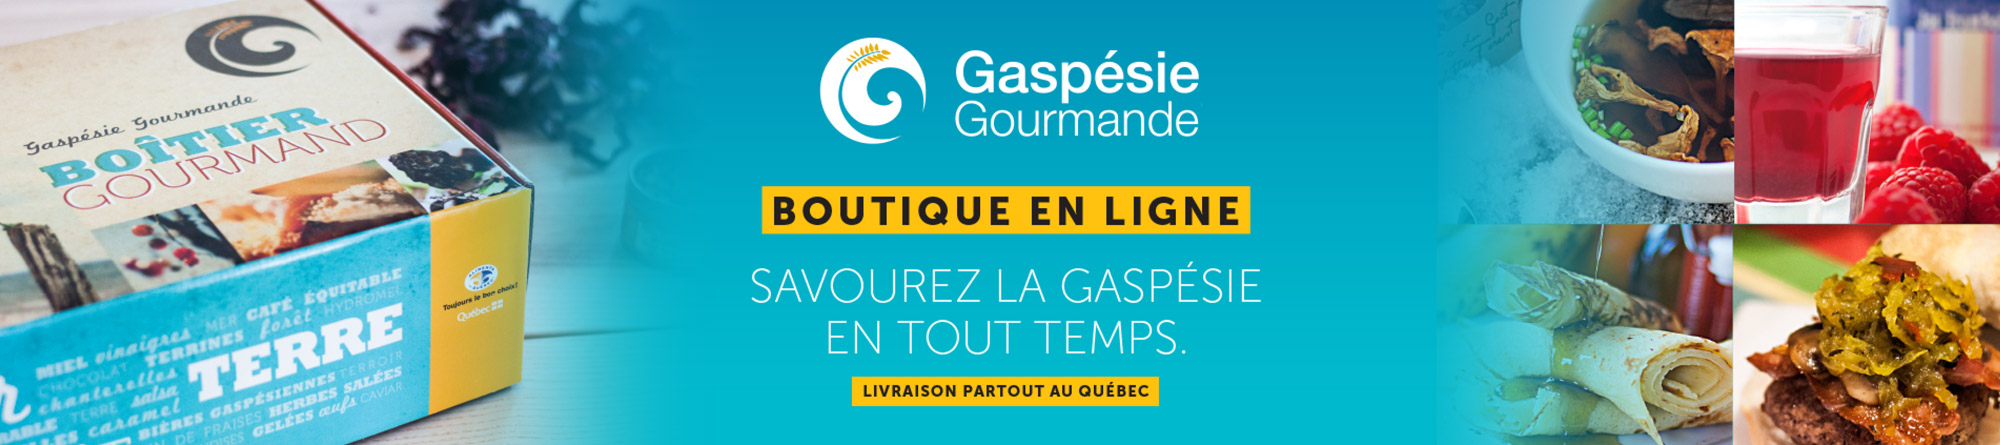 Boutique Gaspésie Gourmande